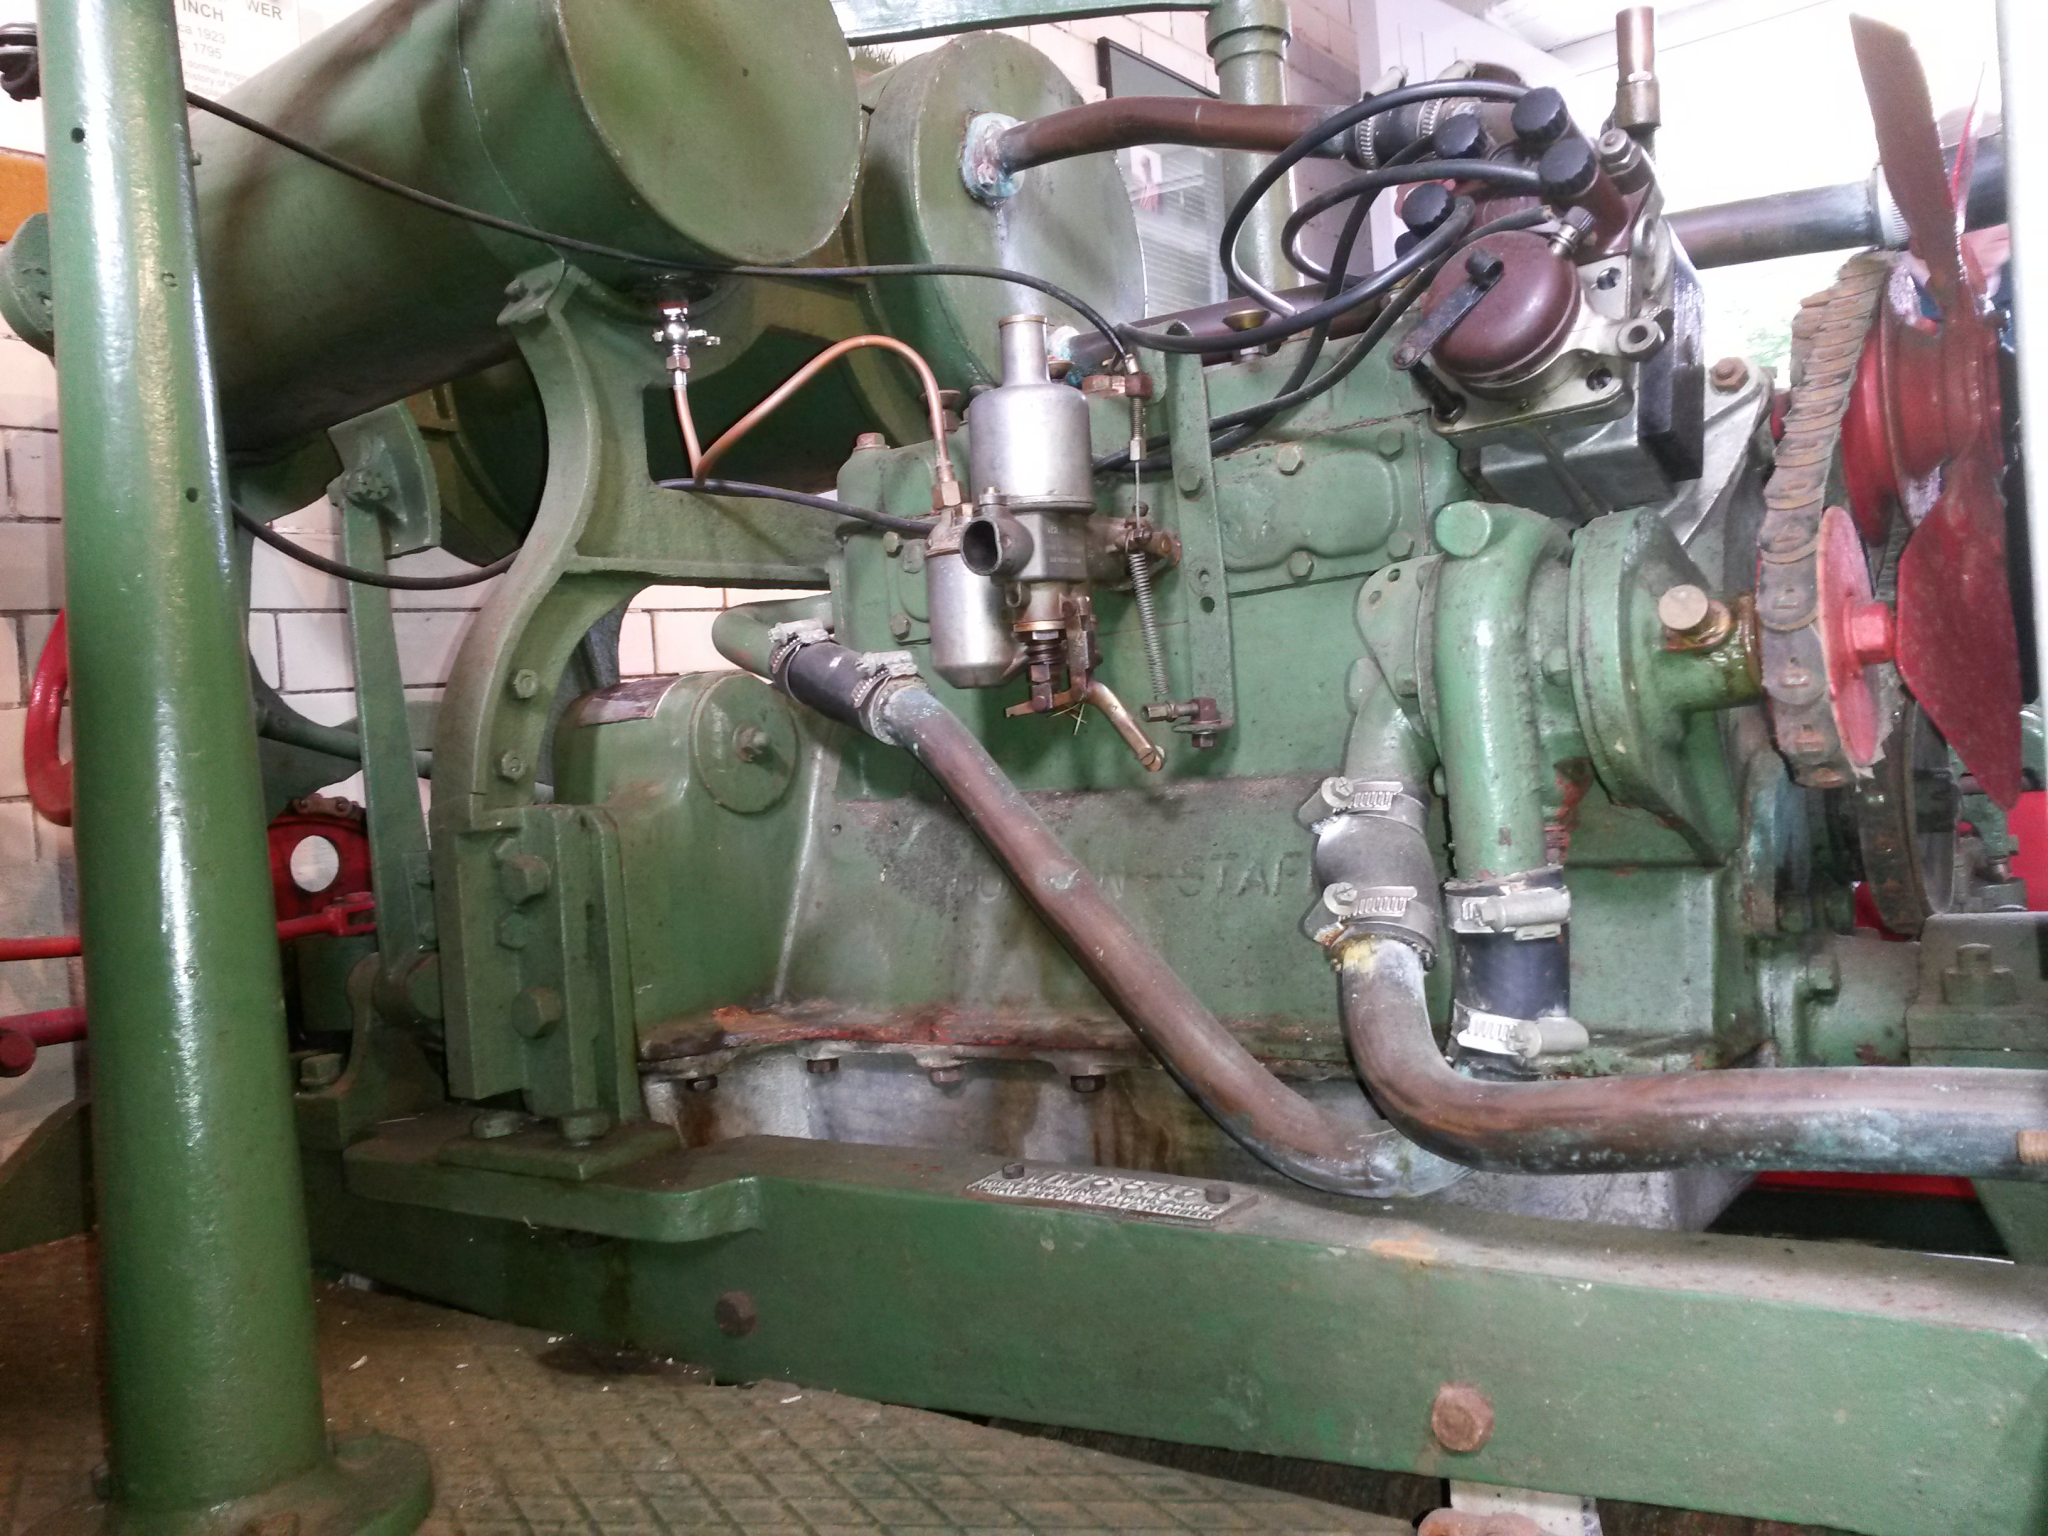 The Dorman Engine on the Mower